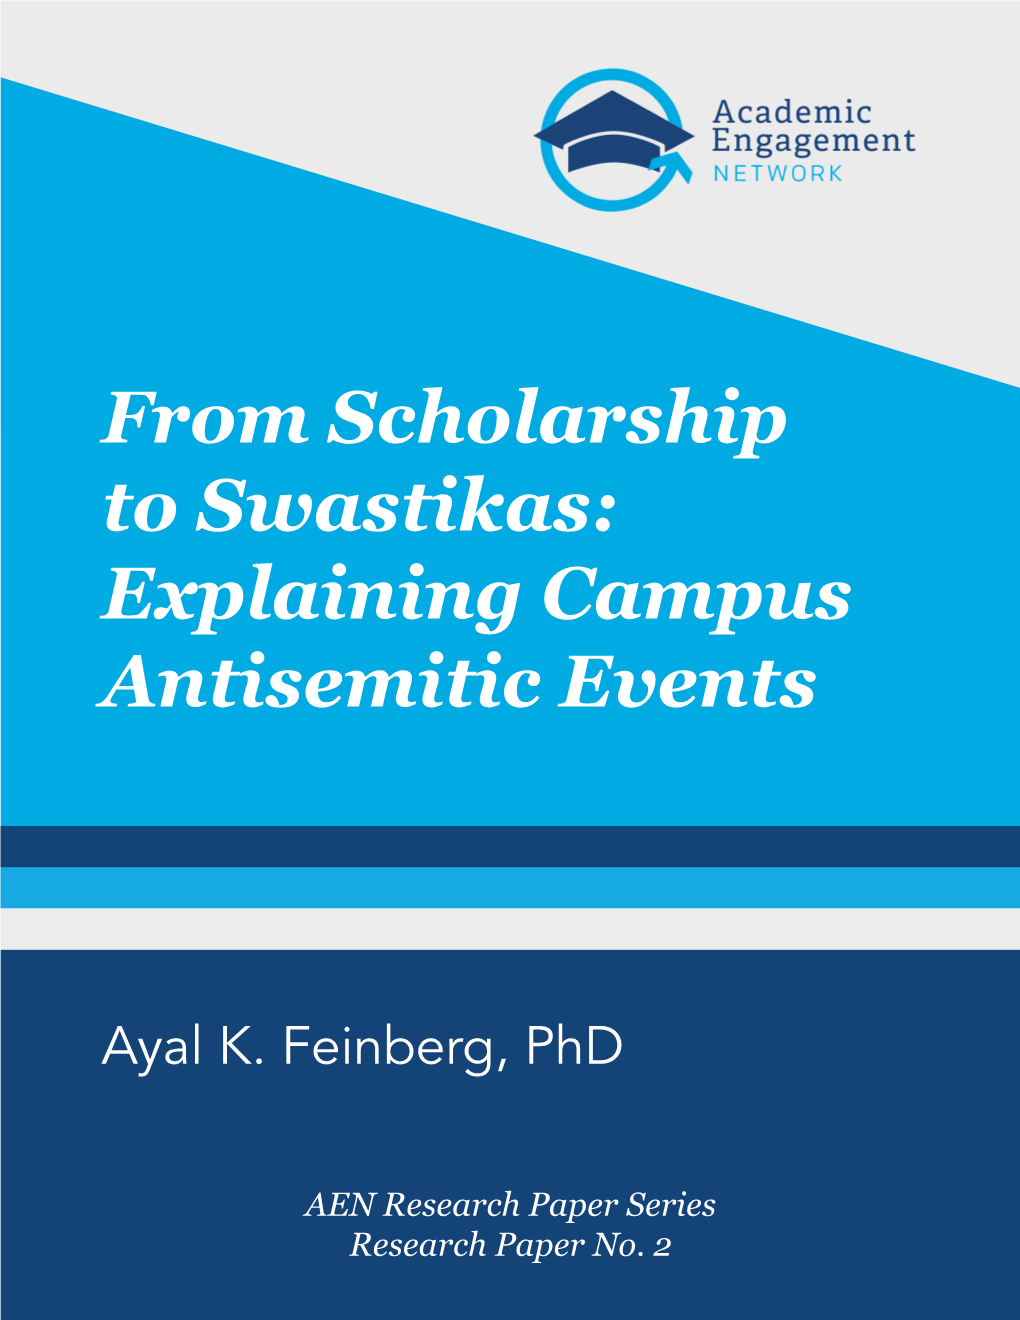 From Scholarship to Swastikas: Explaining Campus Antisemitic Events